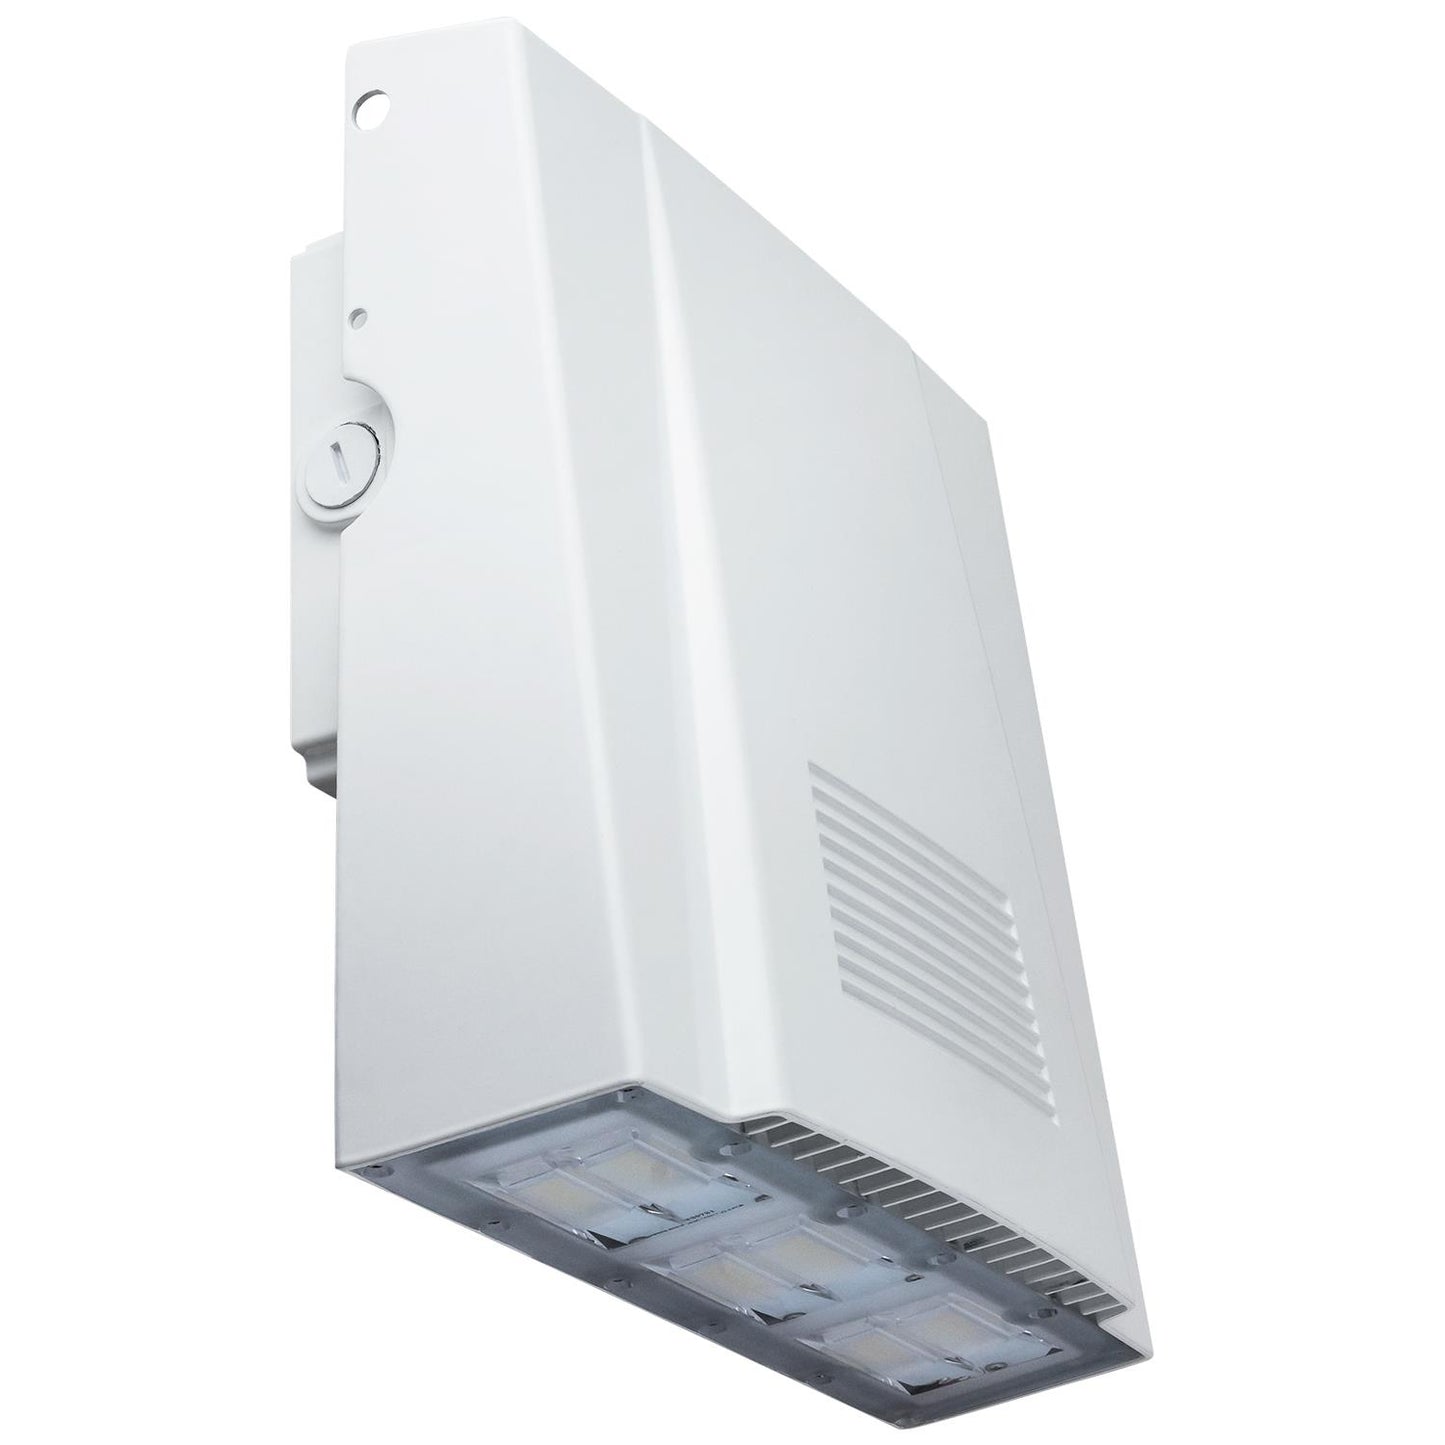 Sunlite 49168-SU LED Slim Profile Outdoor Wall Pack Fixture, 50K - Super White, 8625 Lumen, 75 Watt, White Finish